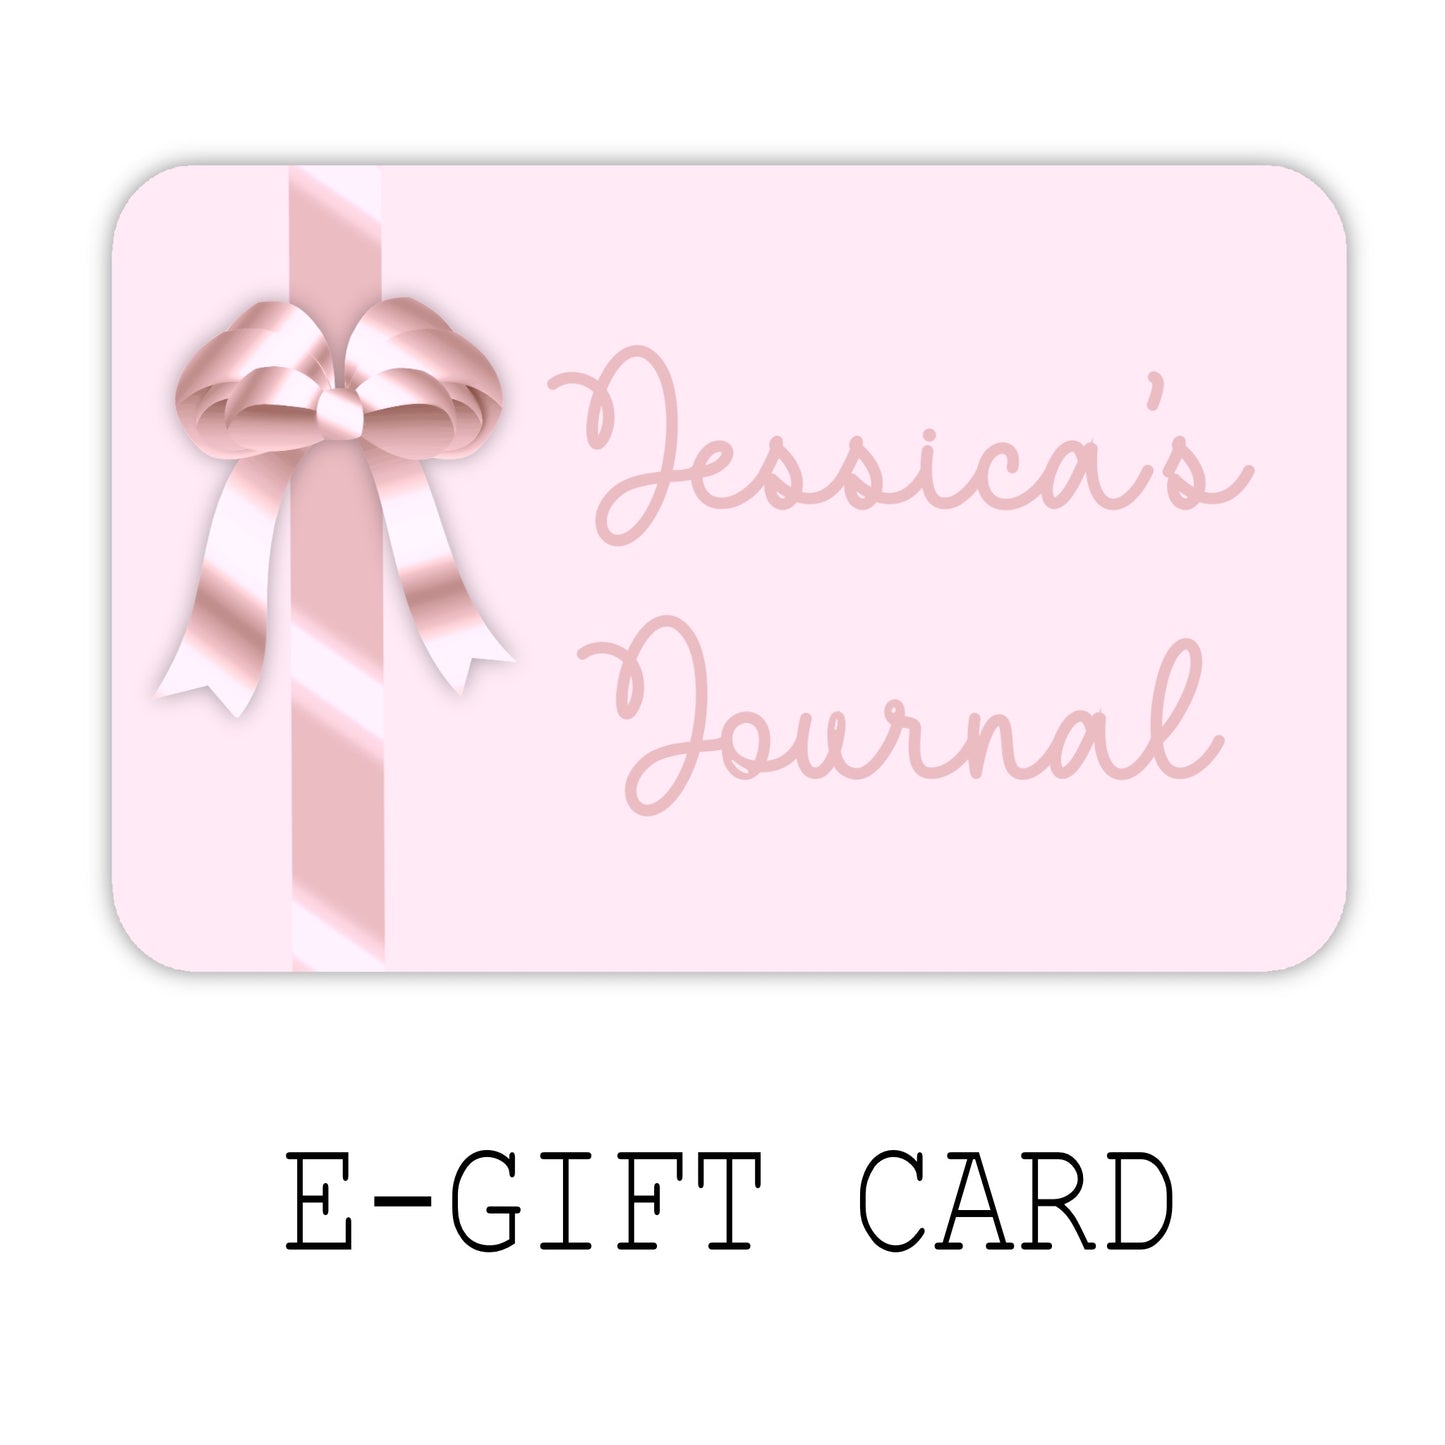 Jessica’s Journal e-Gift Card